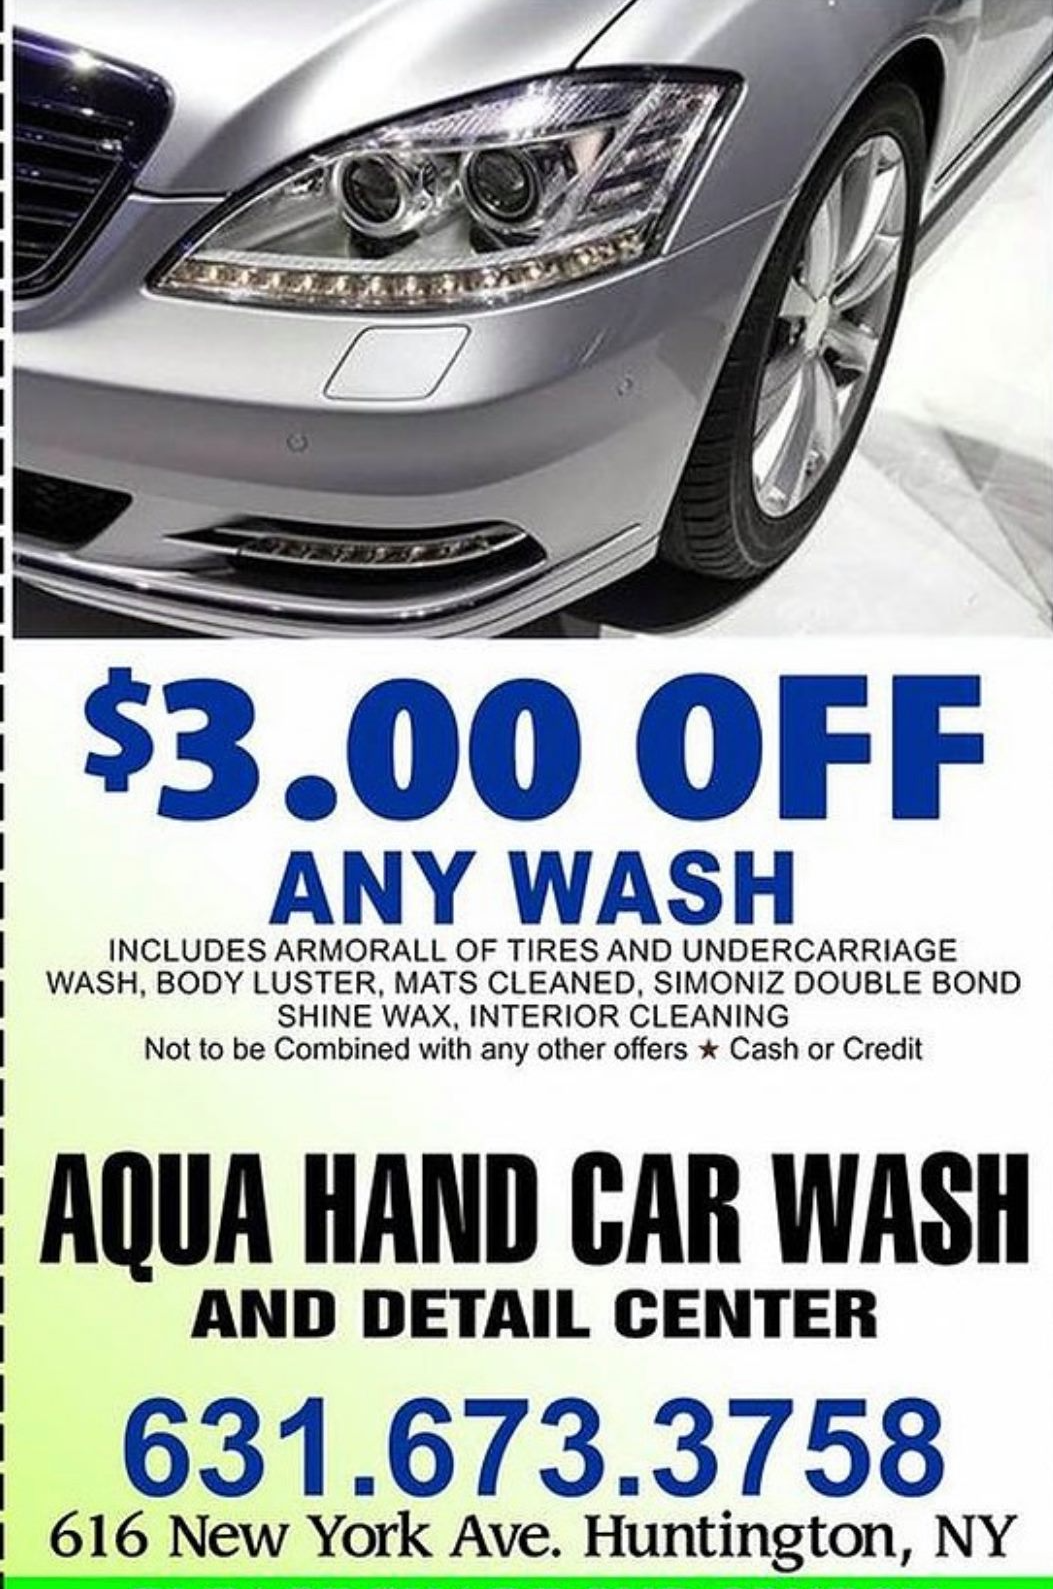 A coupon for aqua hand car wash and detail center